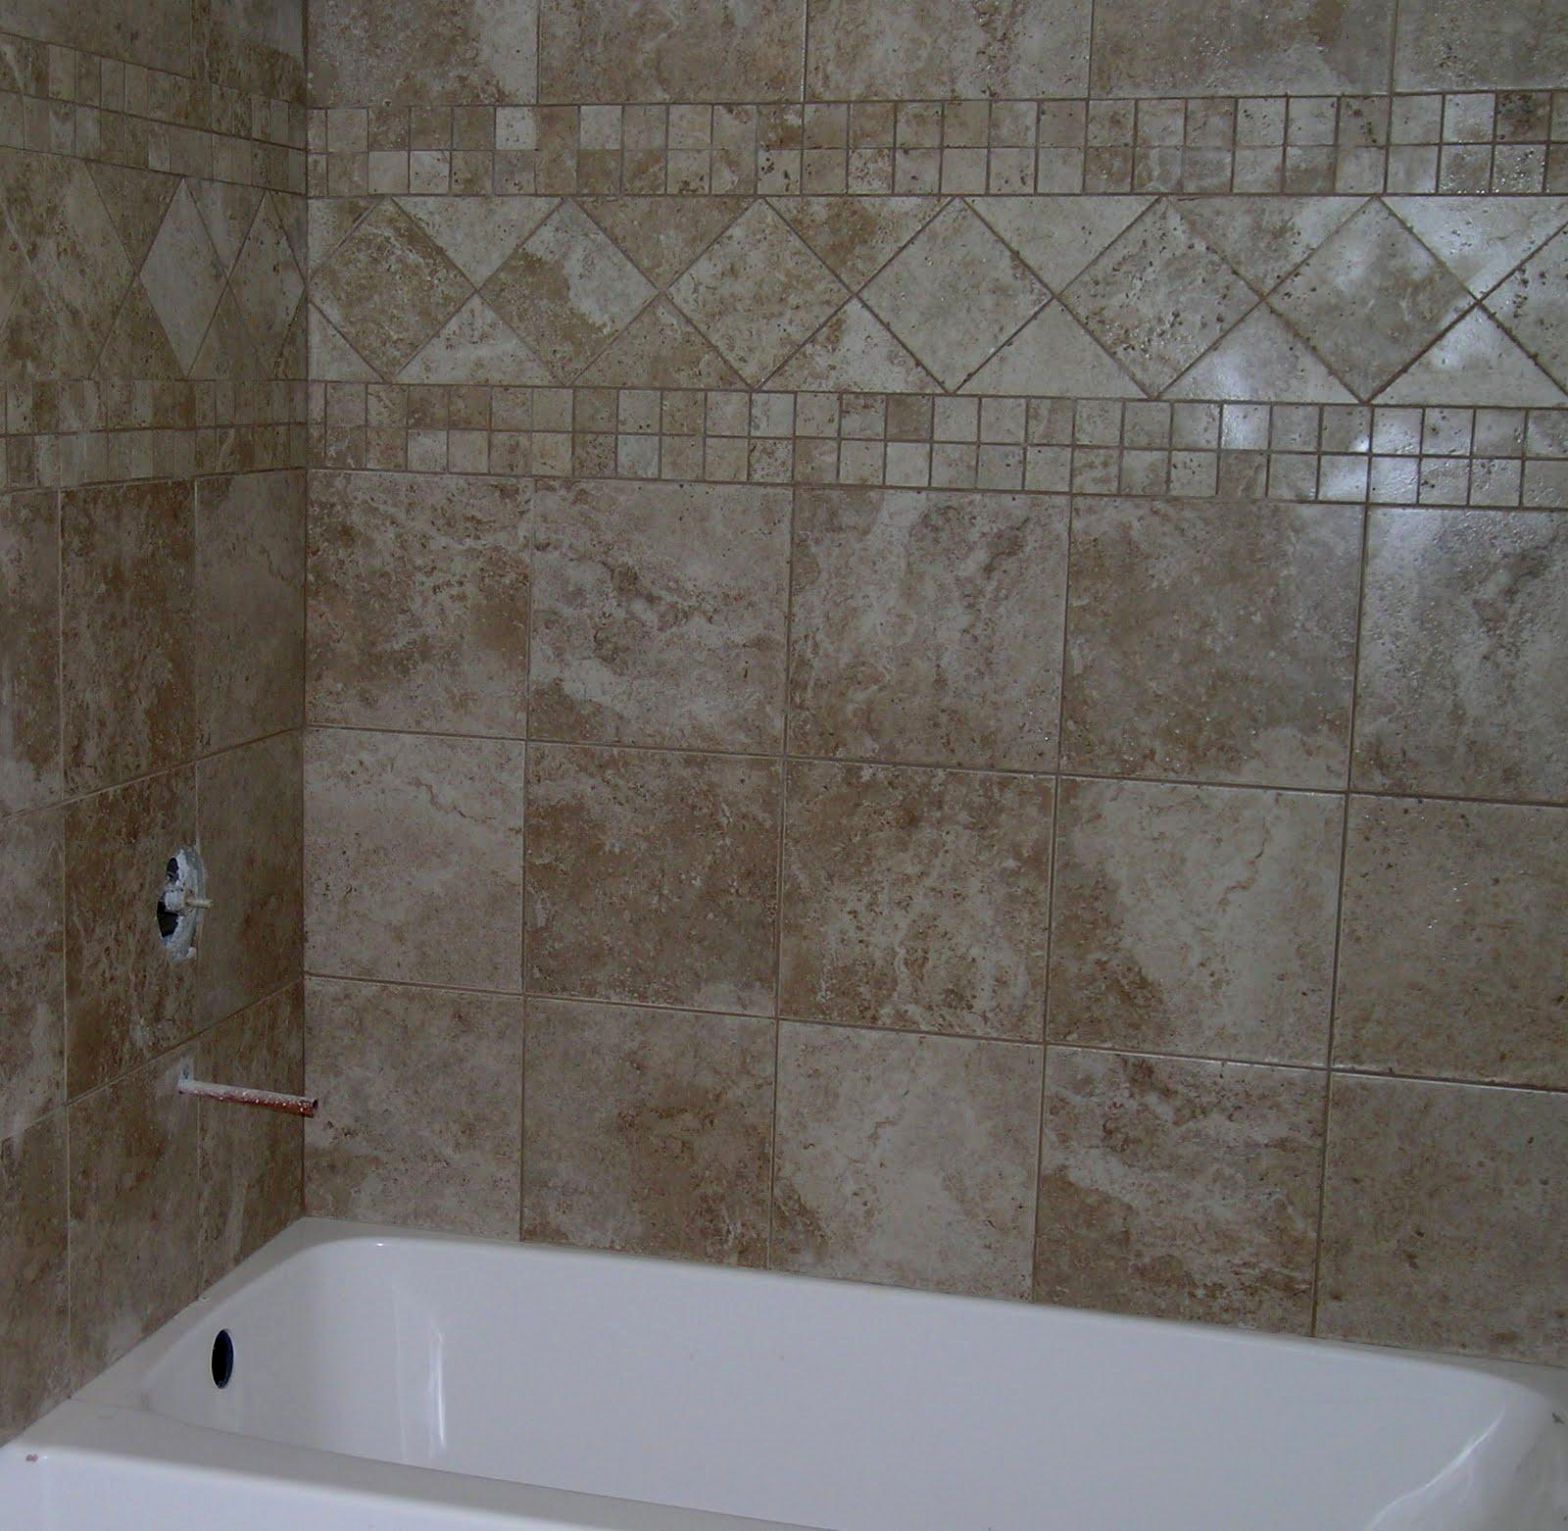 Peel And Stick Tile Bathroom
 Elegant Peel and Stick Bathroom Wall Tiles Home